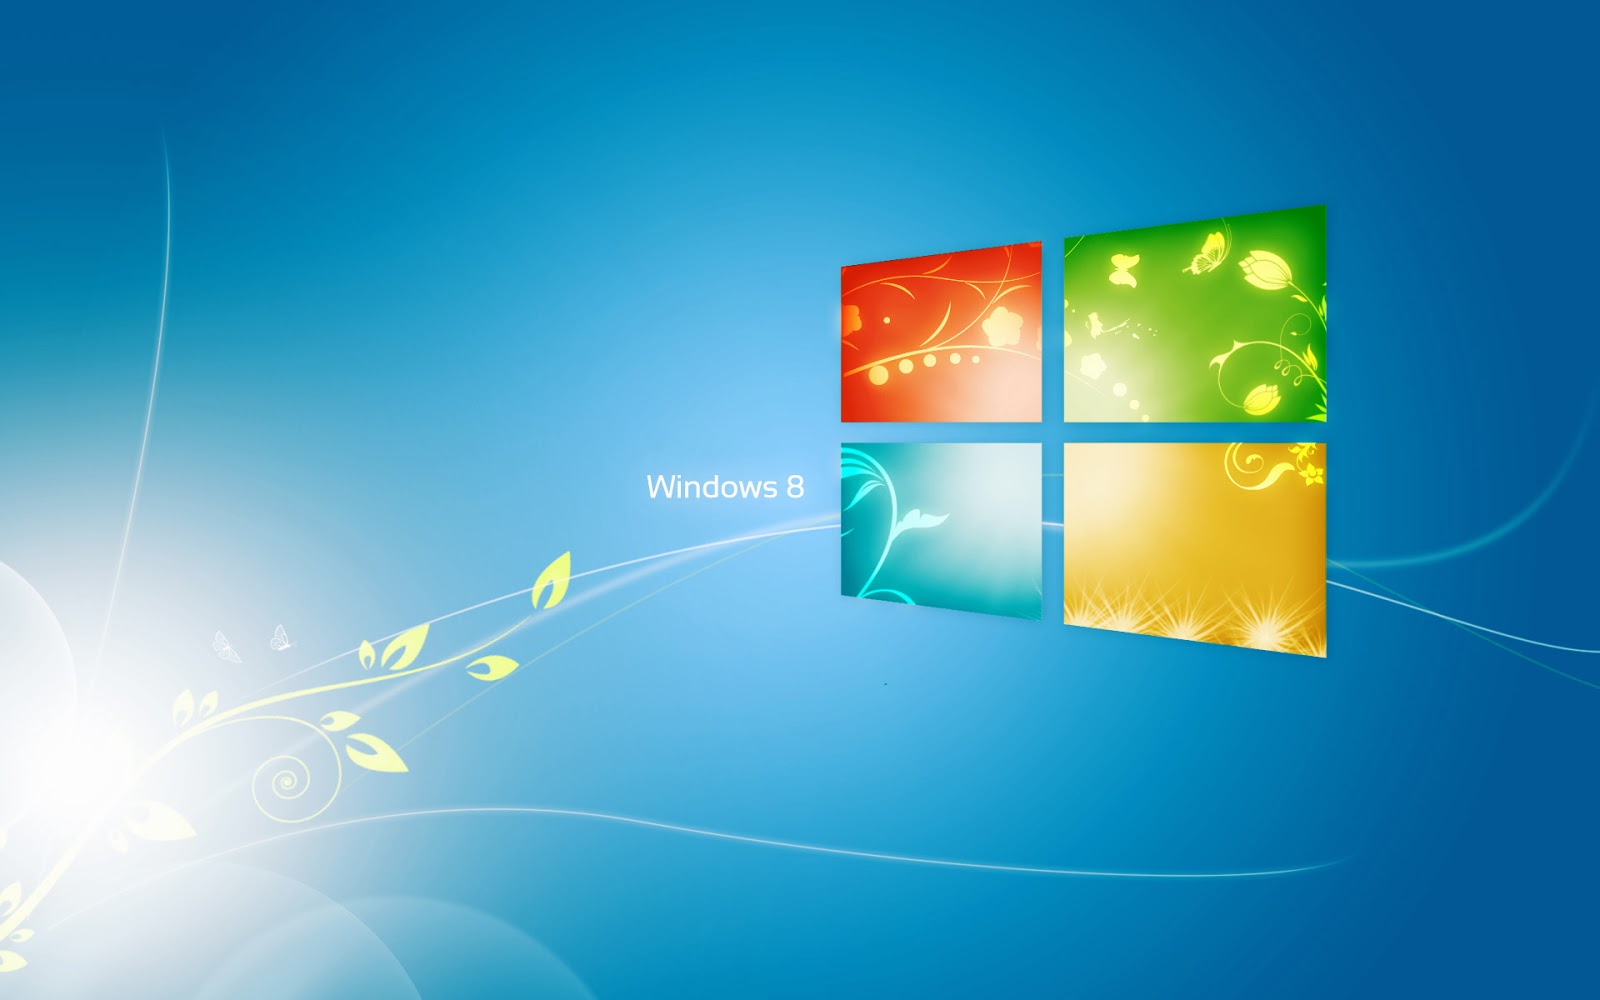 HD Wallpaper 1080p Windows 8 Jpg